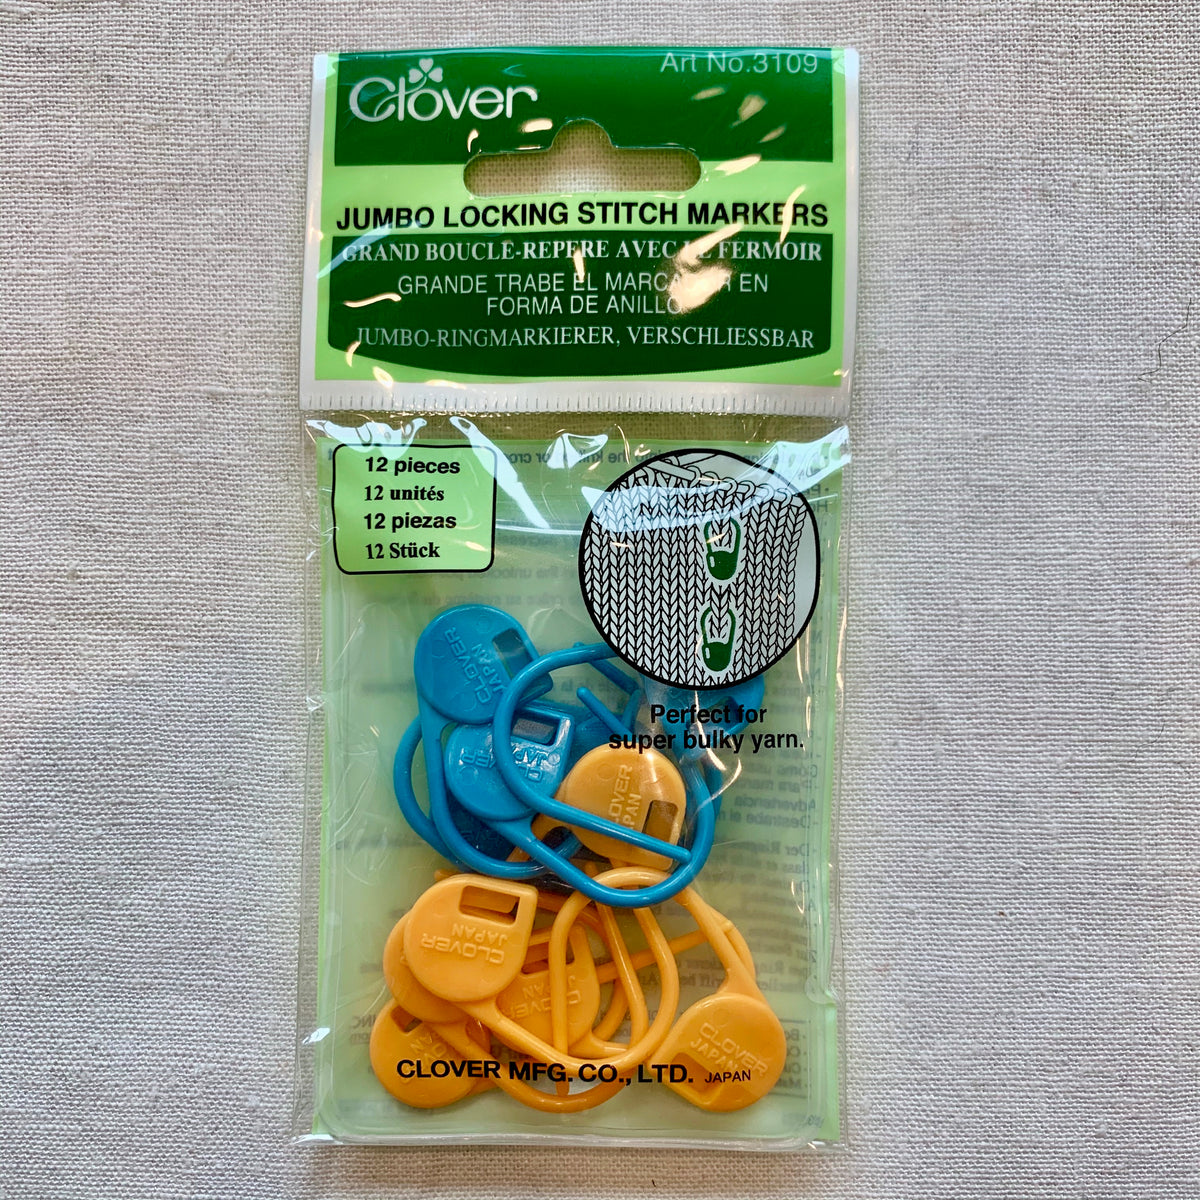 Clover Jumbo Locking Stitch Markers